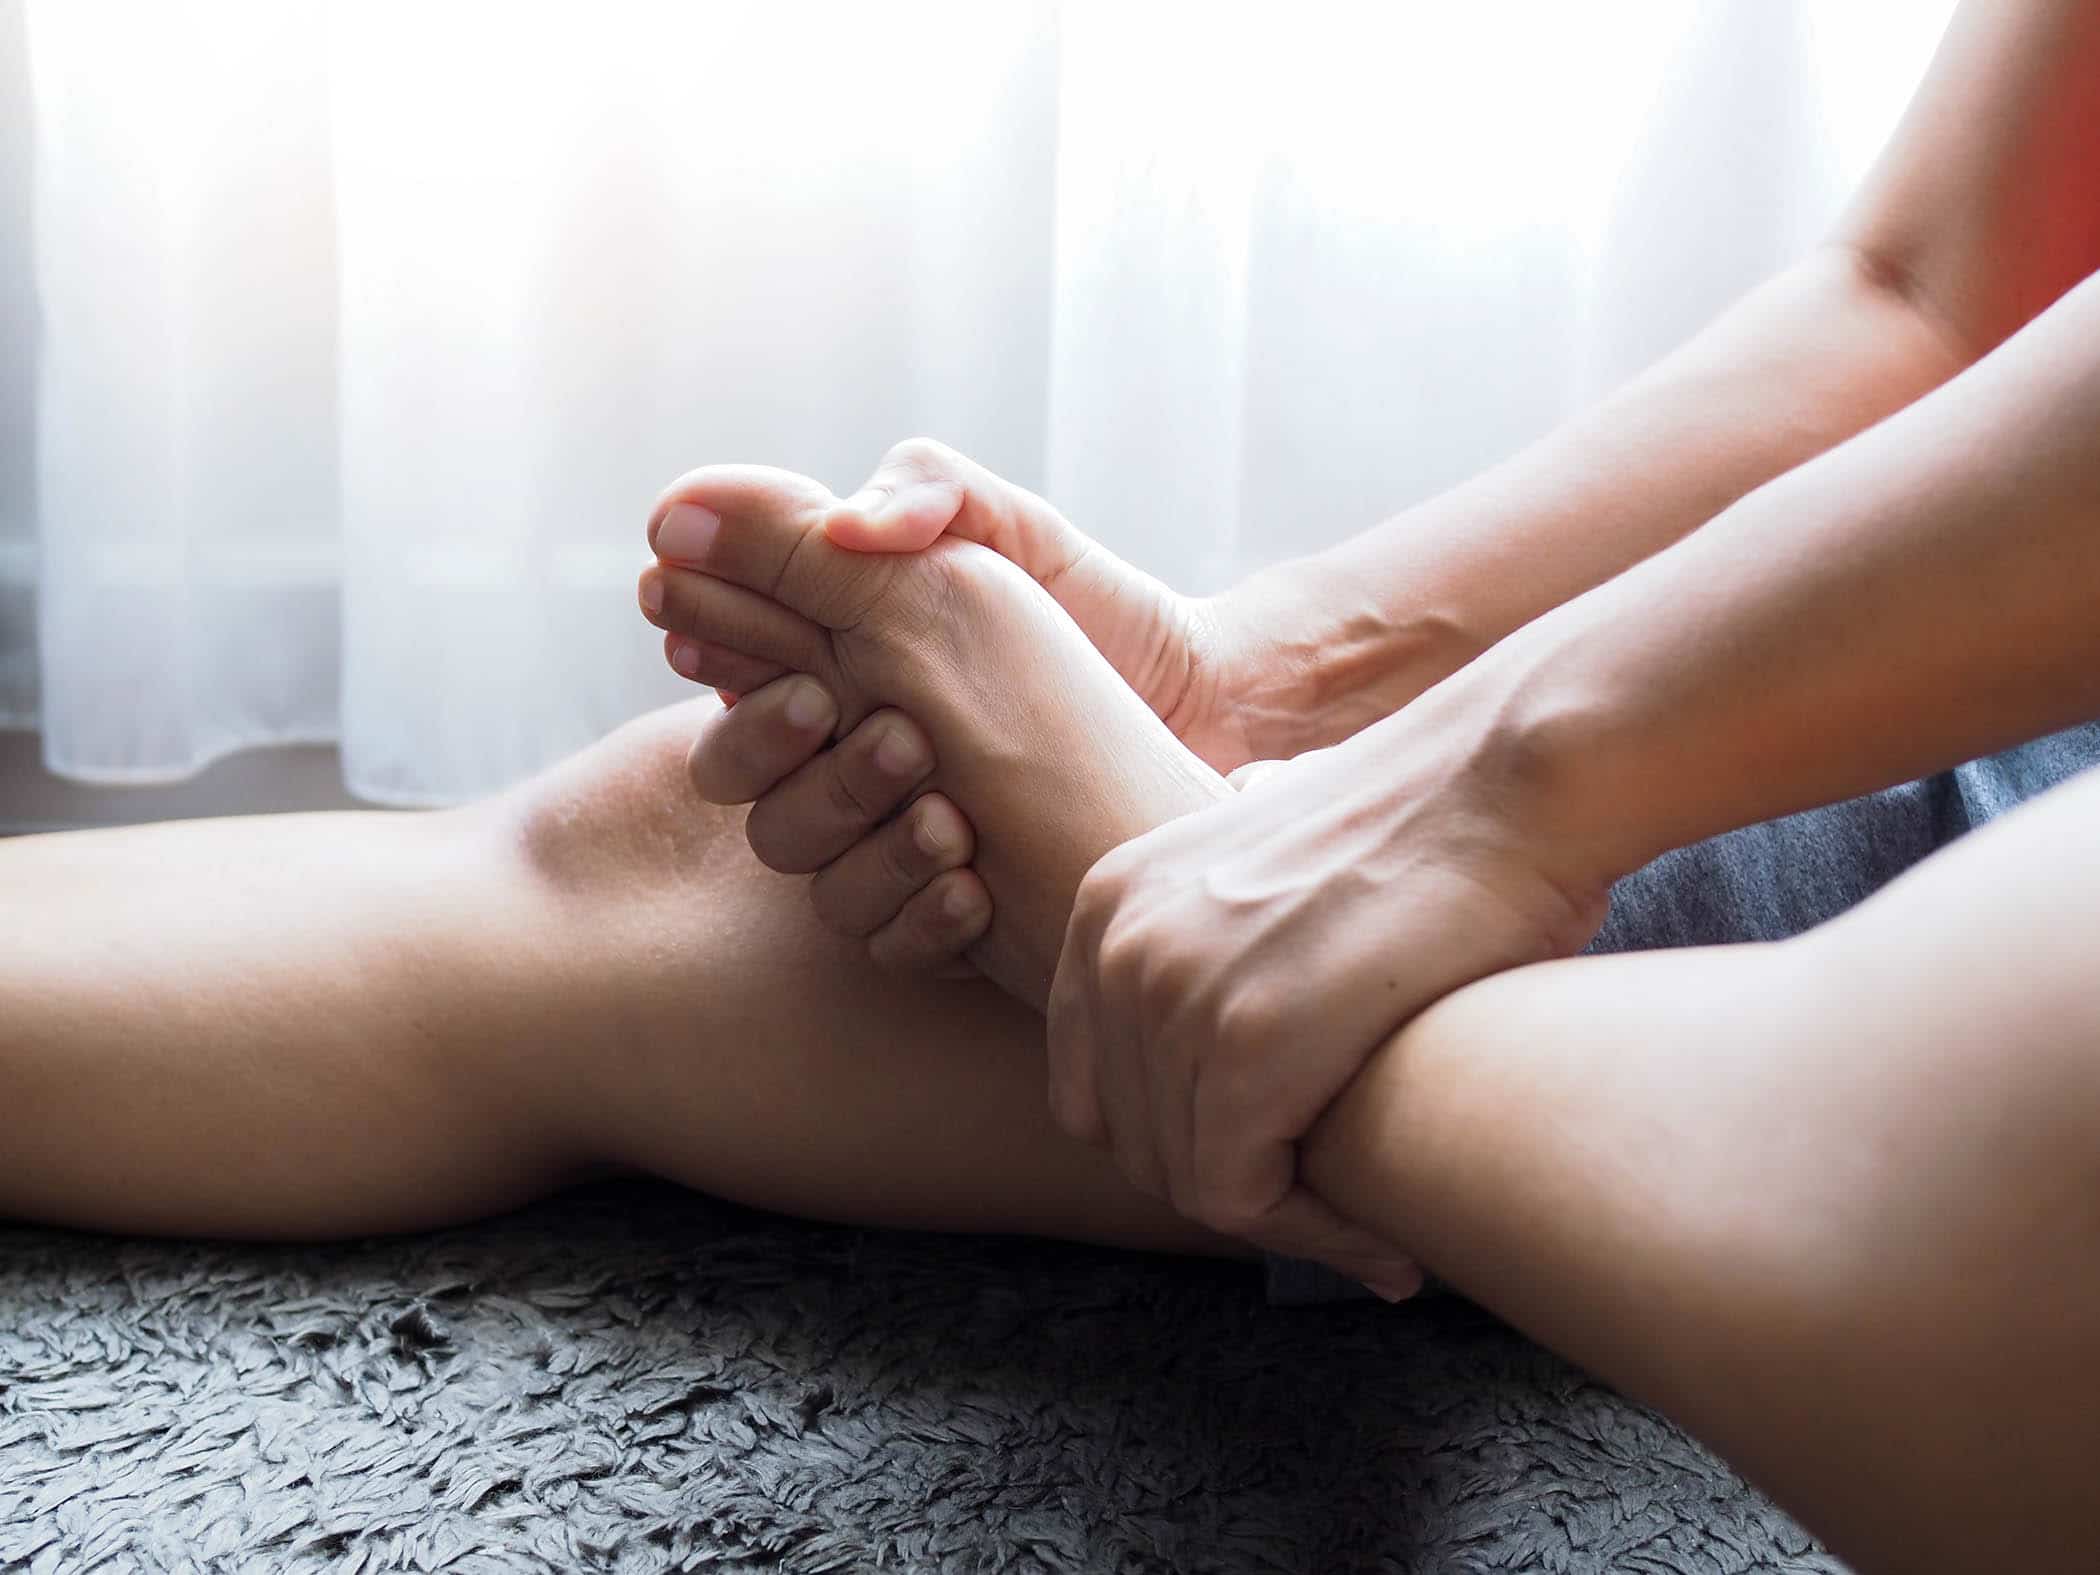 Extensor Tendonitis – Symptoms, Treatment & Basic Foot Exercise